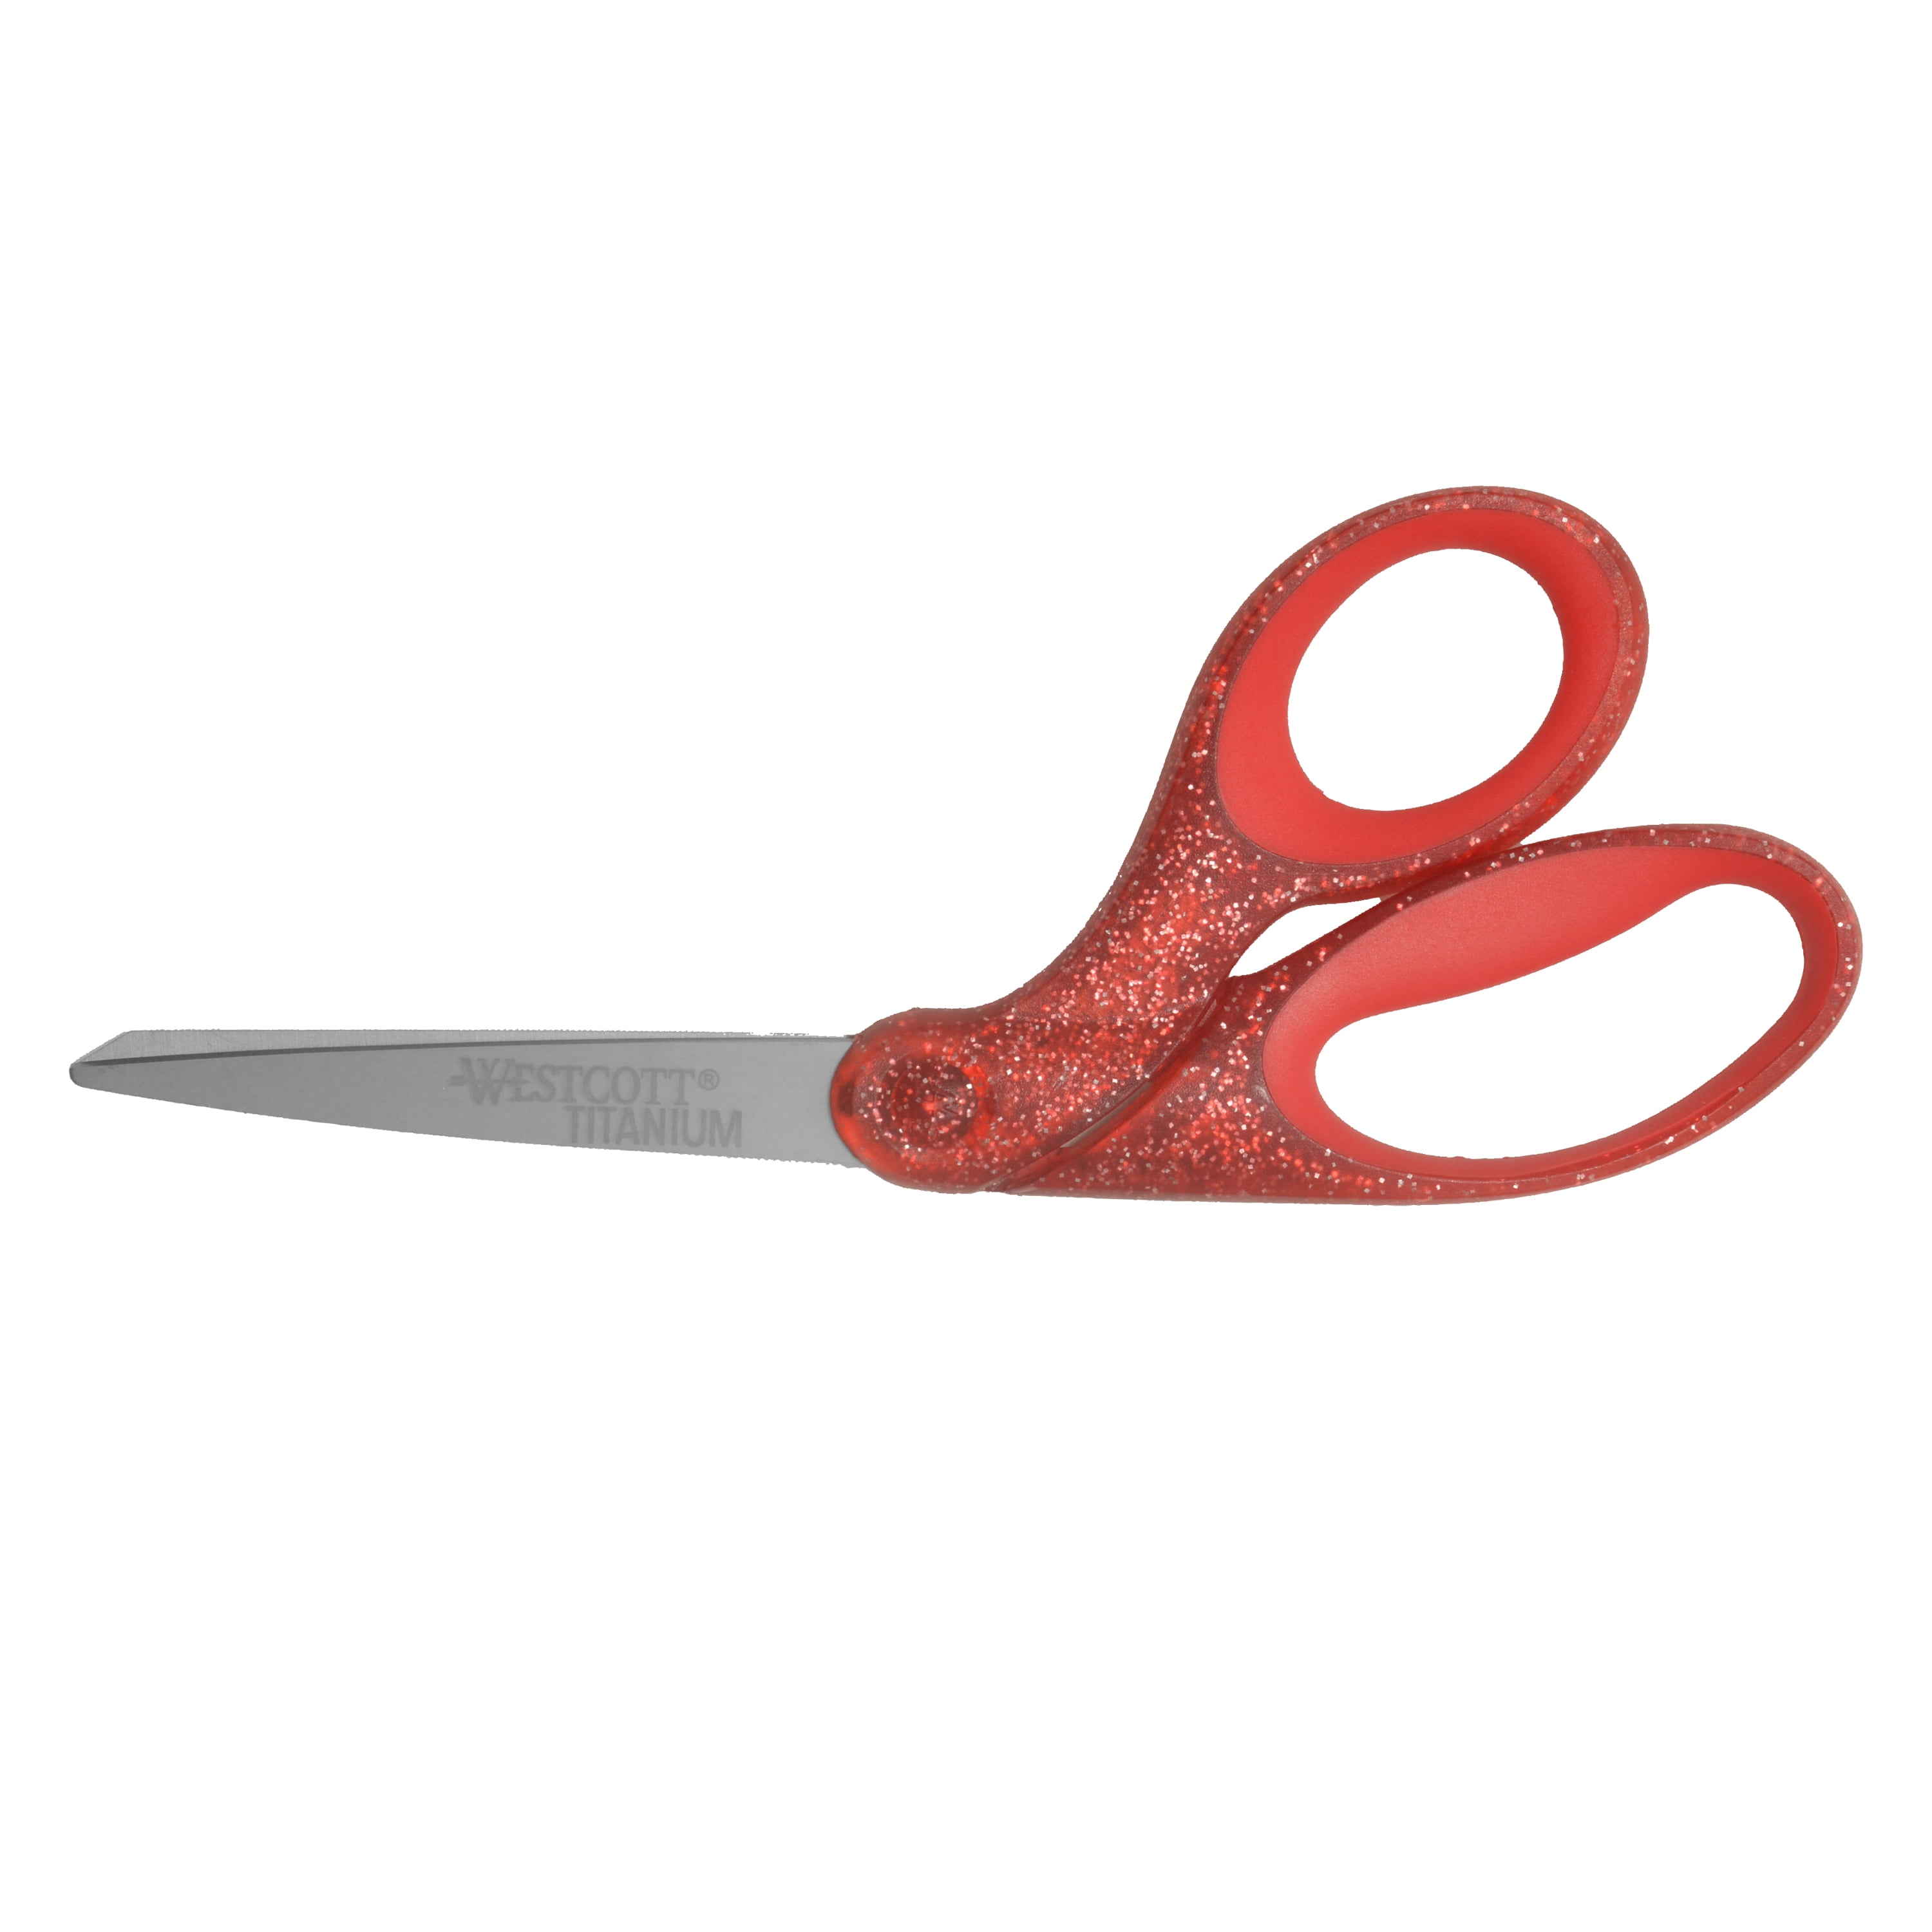 Westcott - Westcott 8 All Purpose Shredder Scissor, Red (15471)